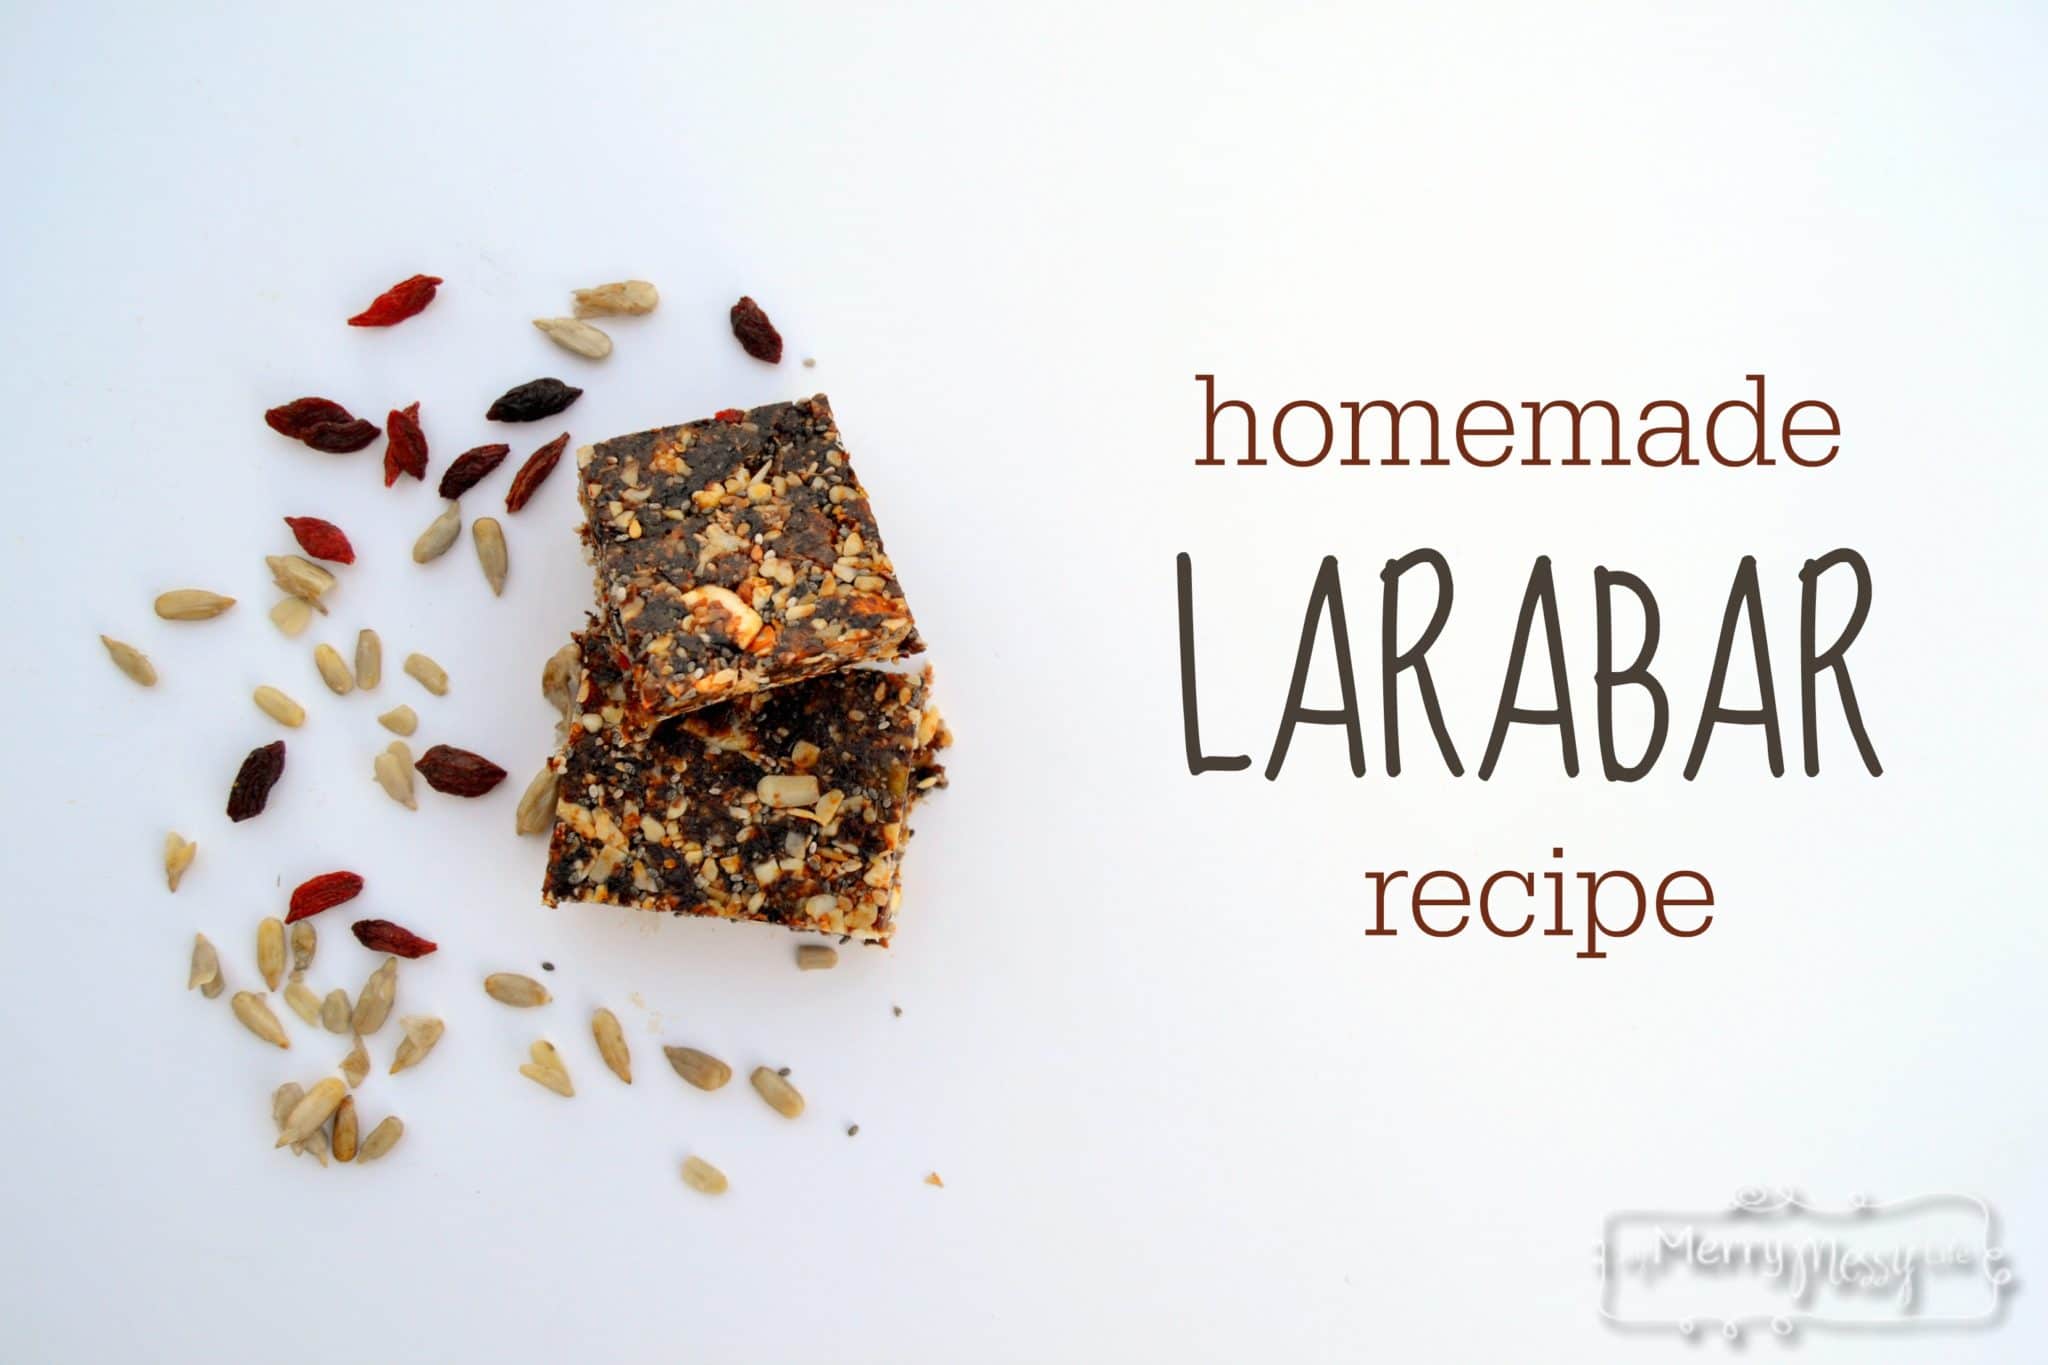 Homemade Larabar Recipe – Easy, Real & Nutritious!